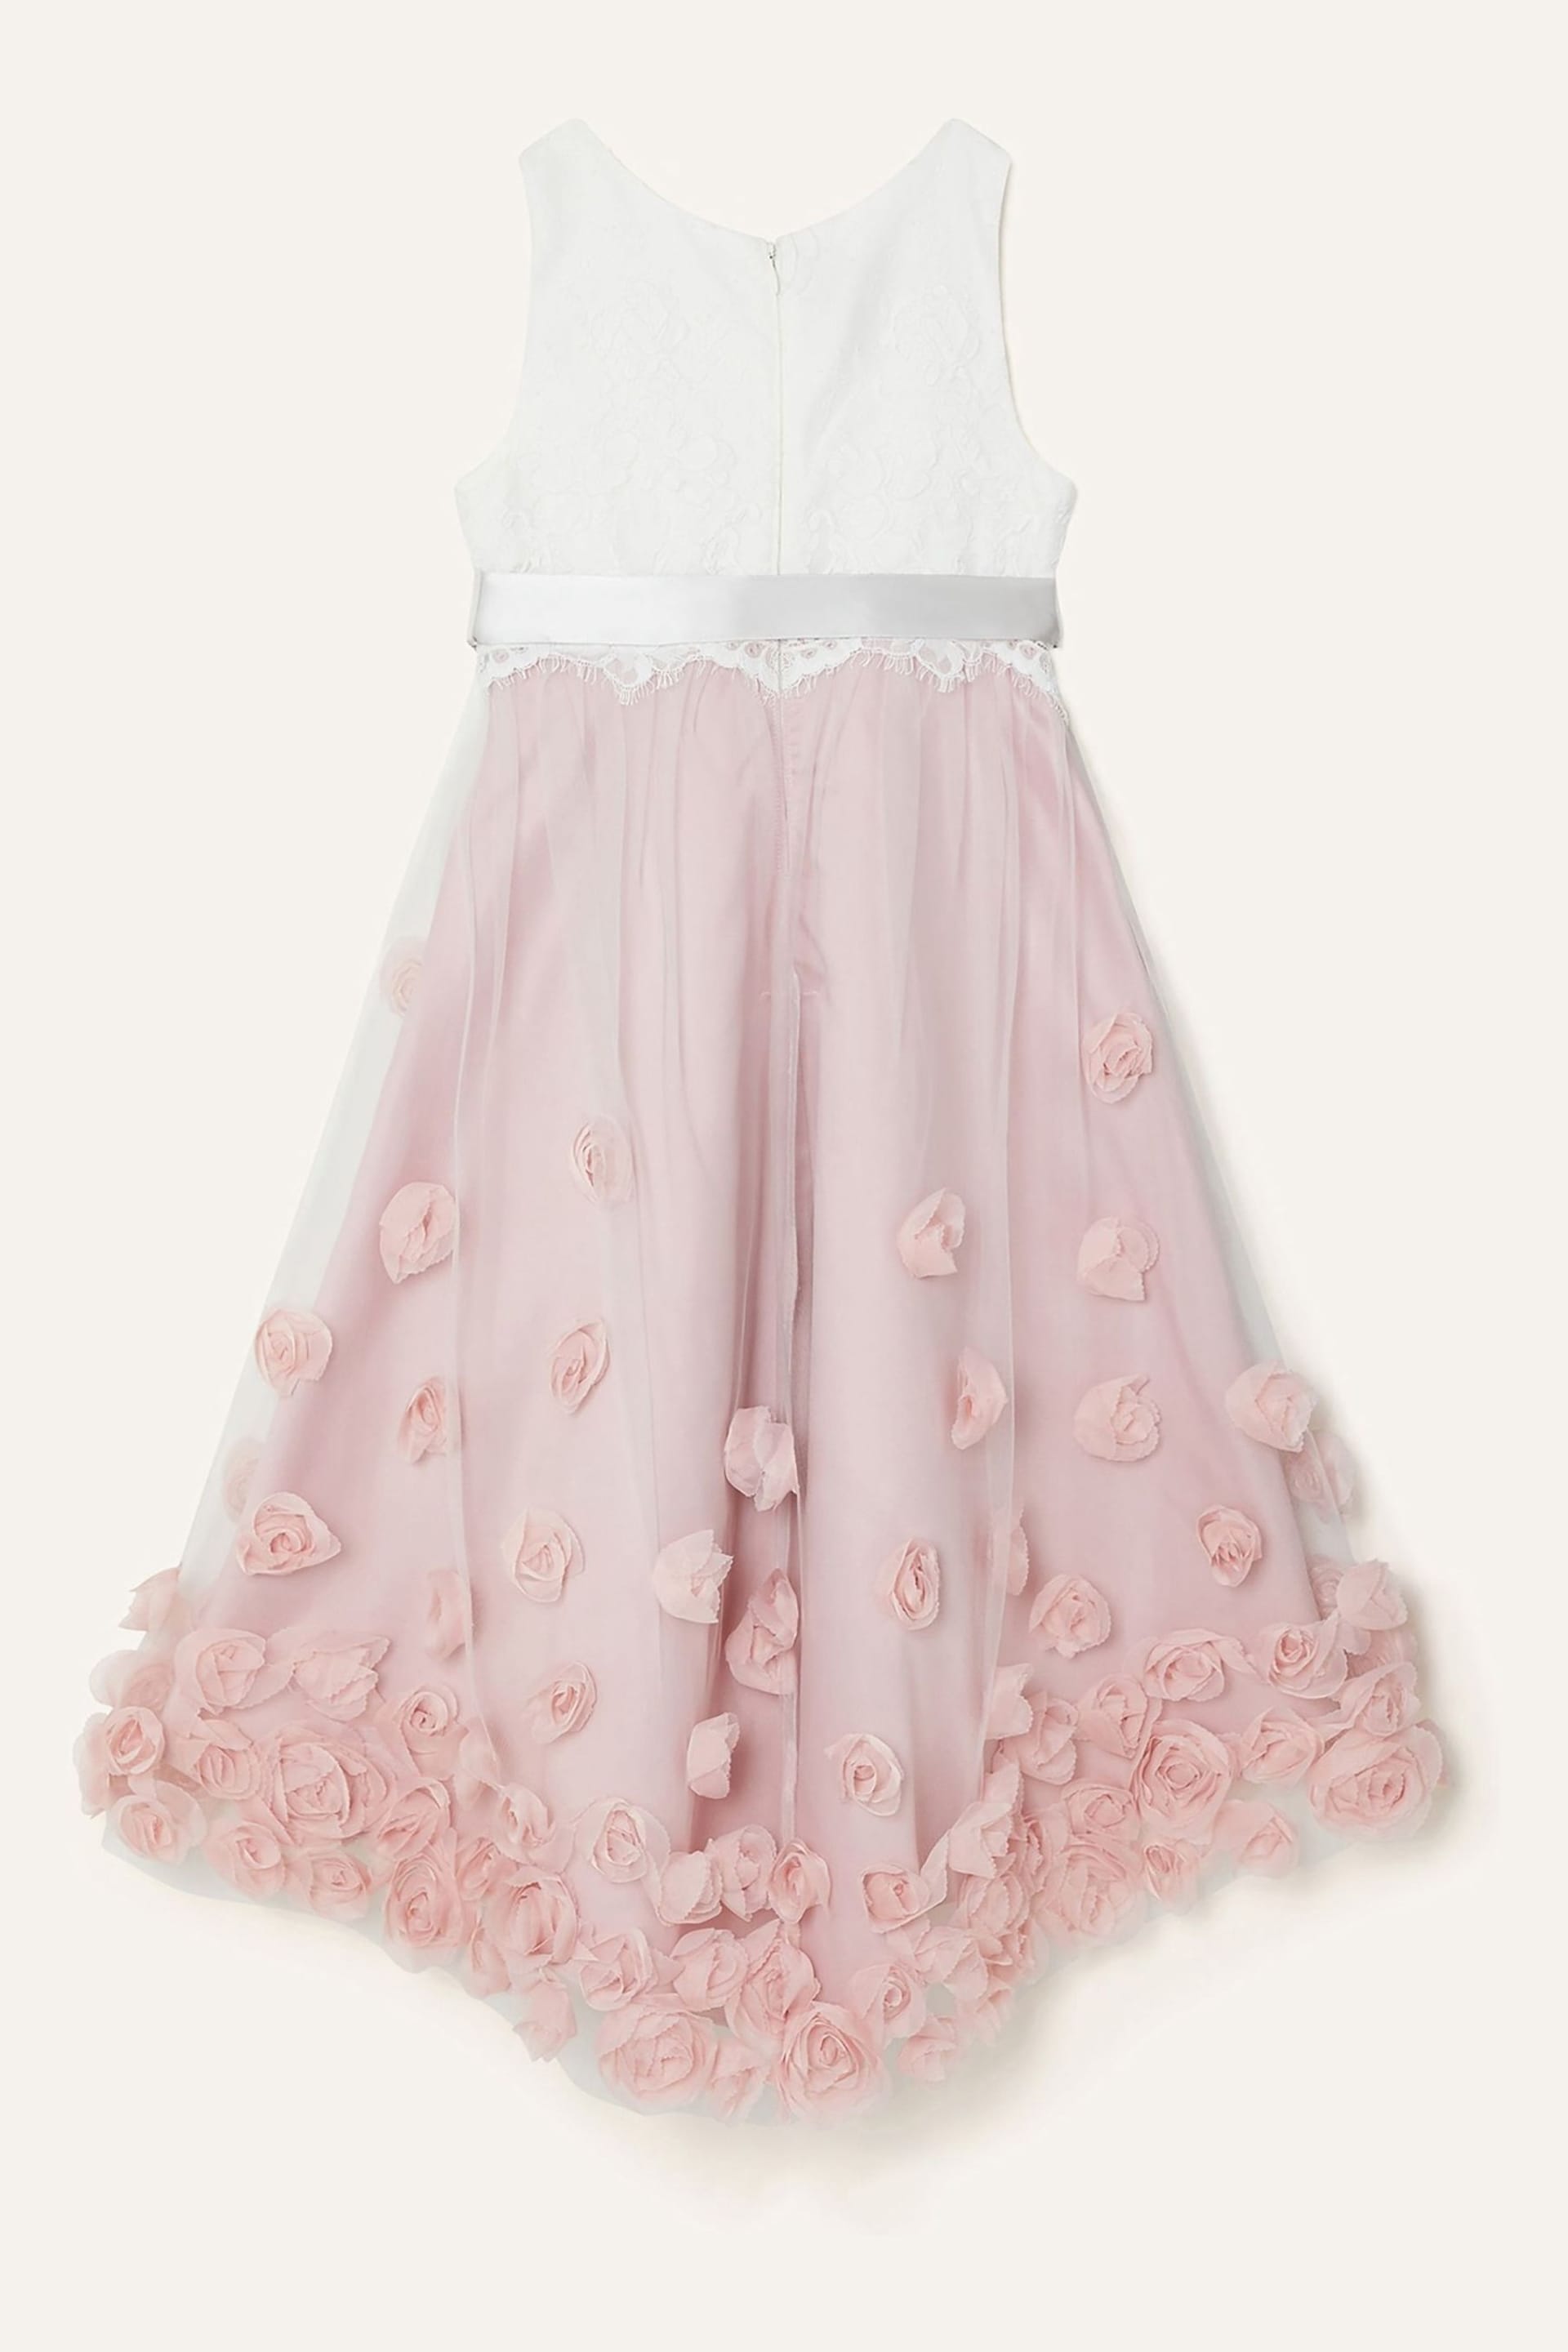 Monsoon Pink Ianthe 3D Flower Dress - Image 2 of 3